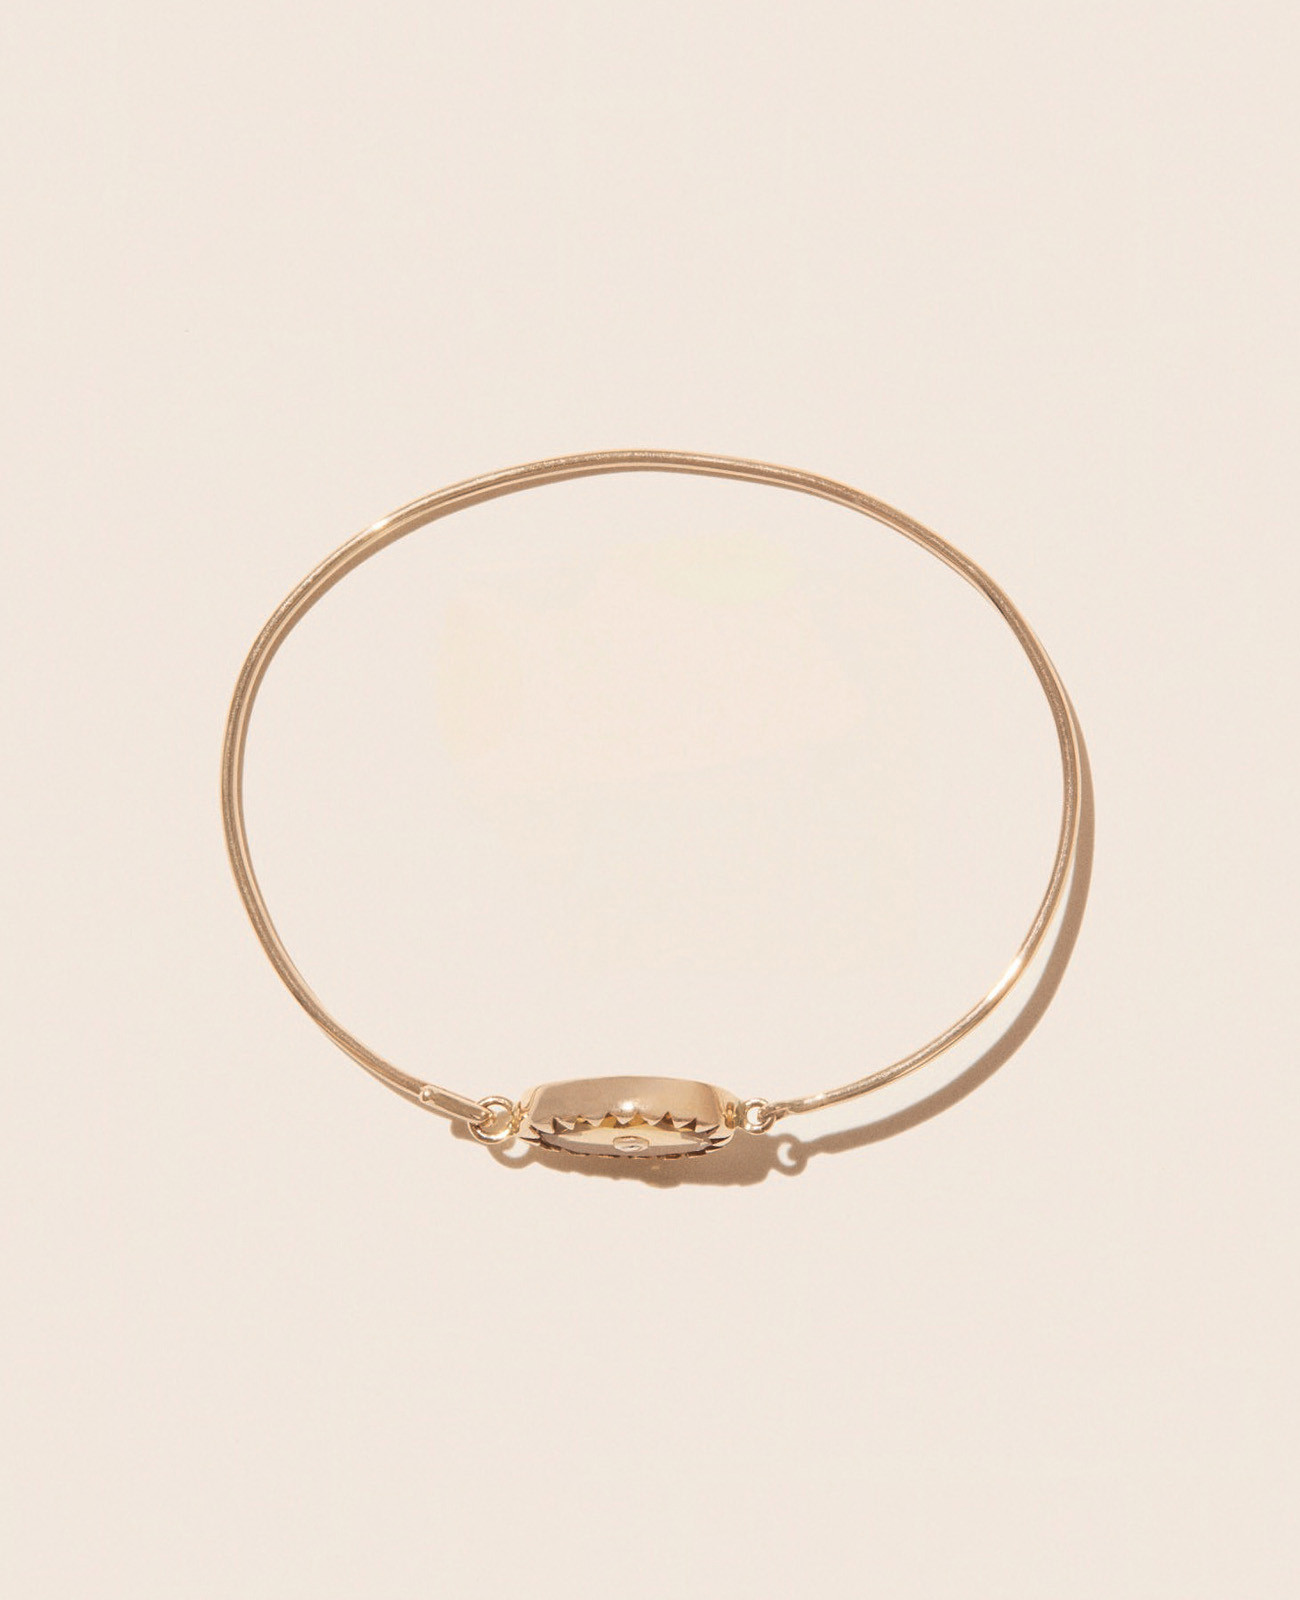 ORSO HONEY QUARTZ bracelet pascale monvoisin jewelry paris